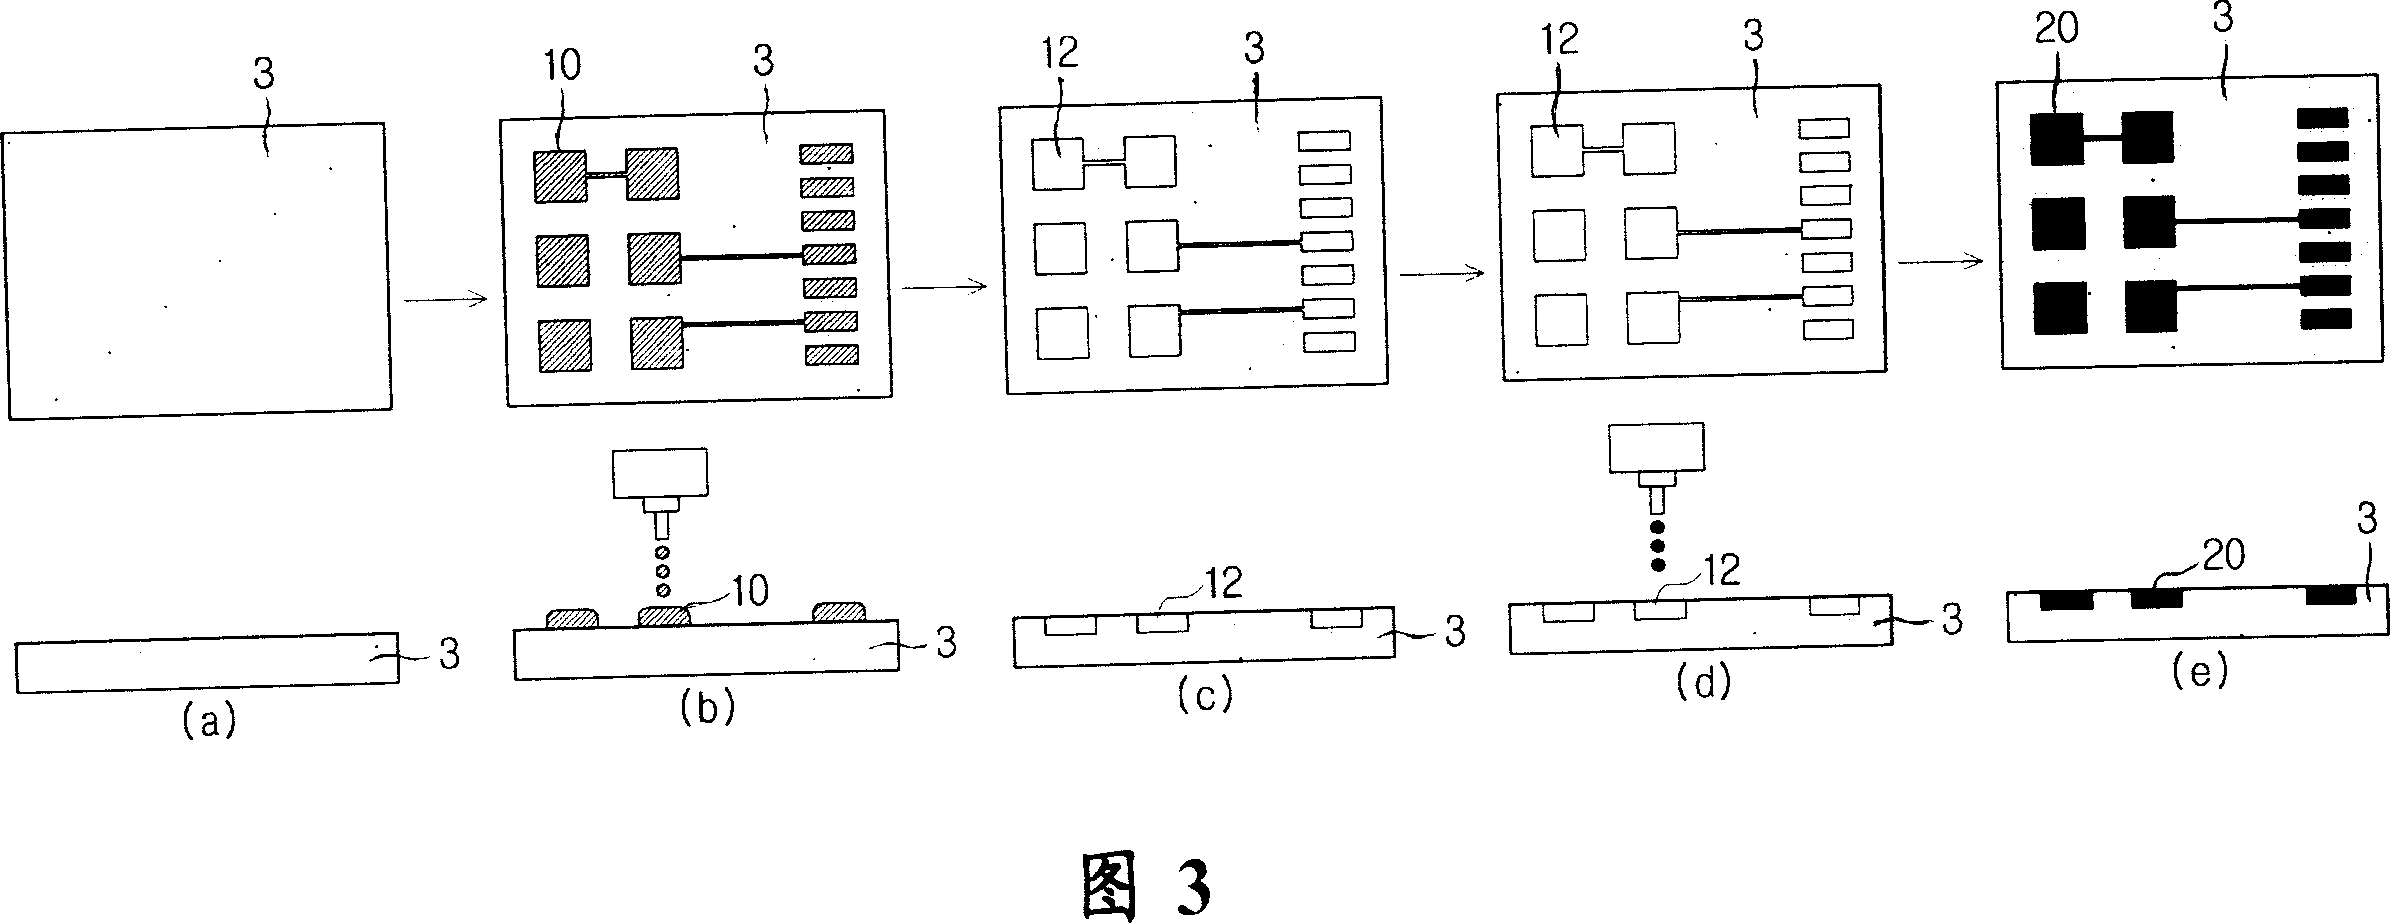 Method of forming circuit pattern on printed circuit board